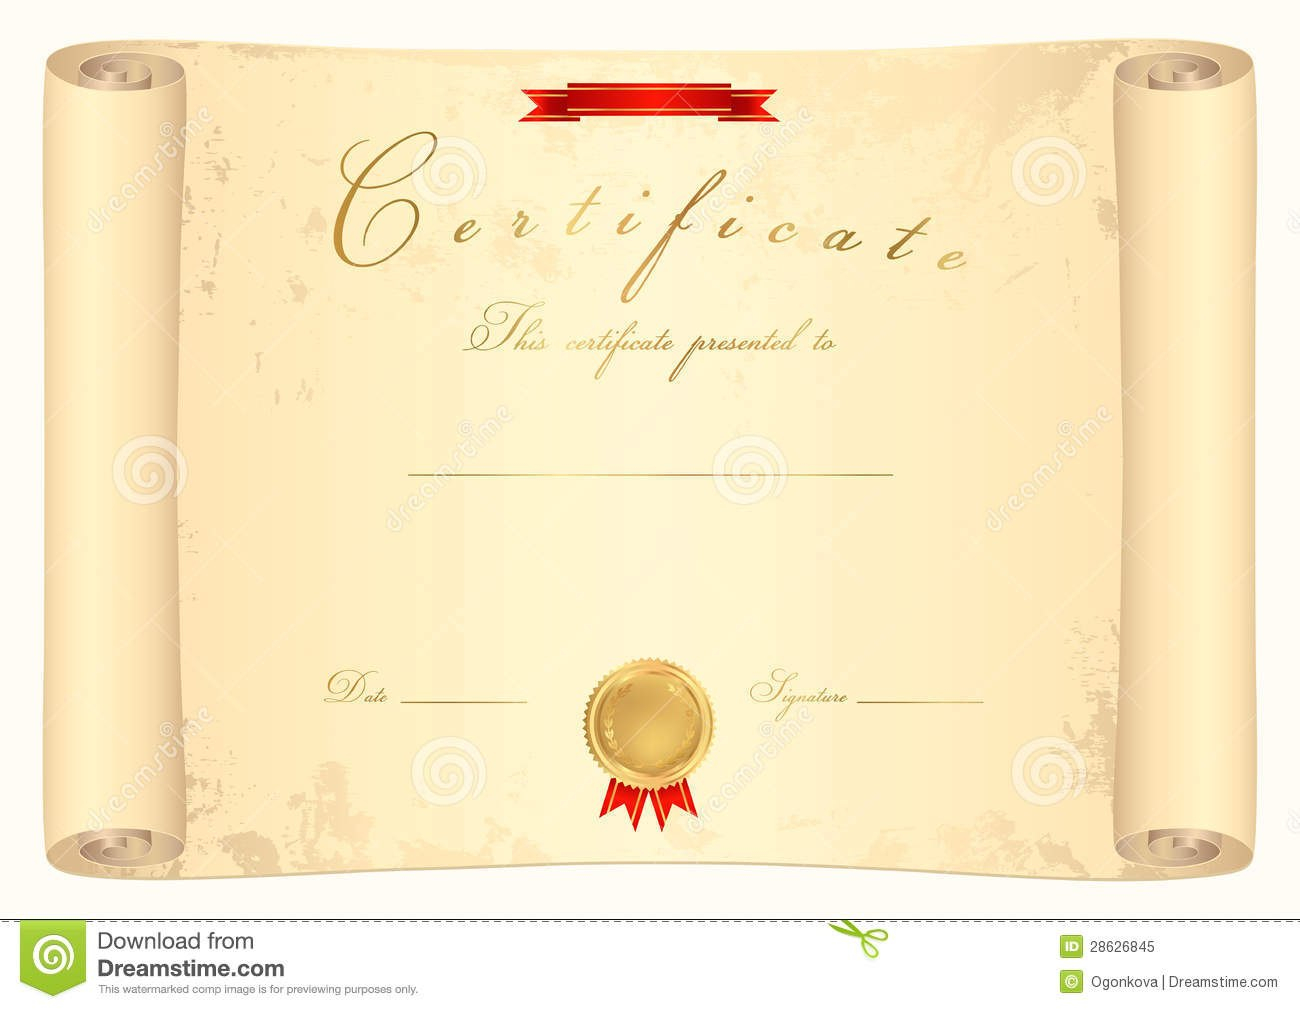 Scroll Certificate Templates  Sansurabionetassociats with regard to Certificate Scroll Template